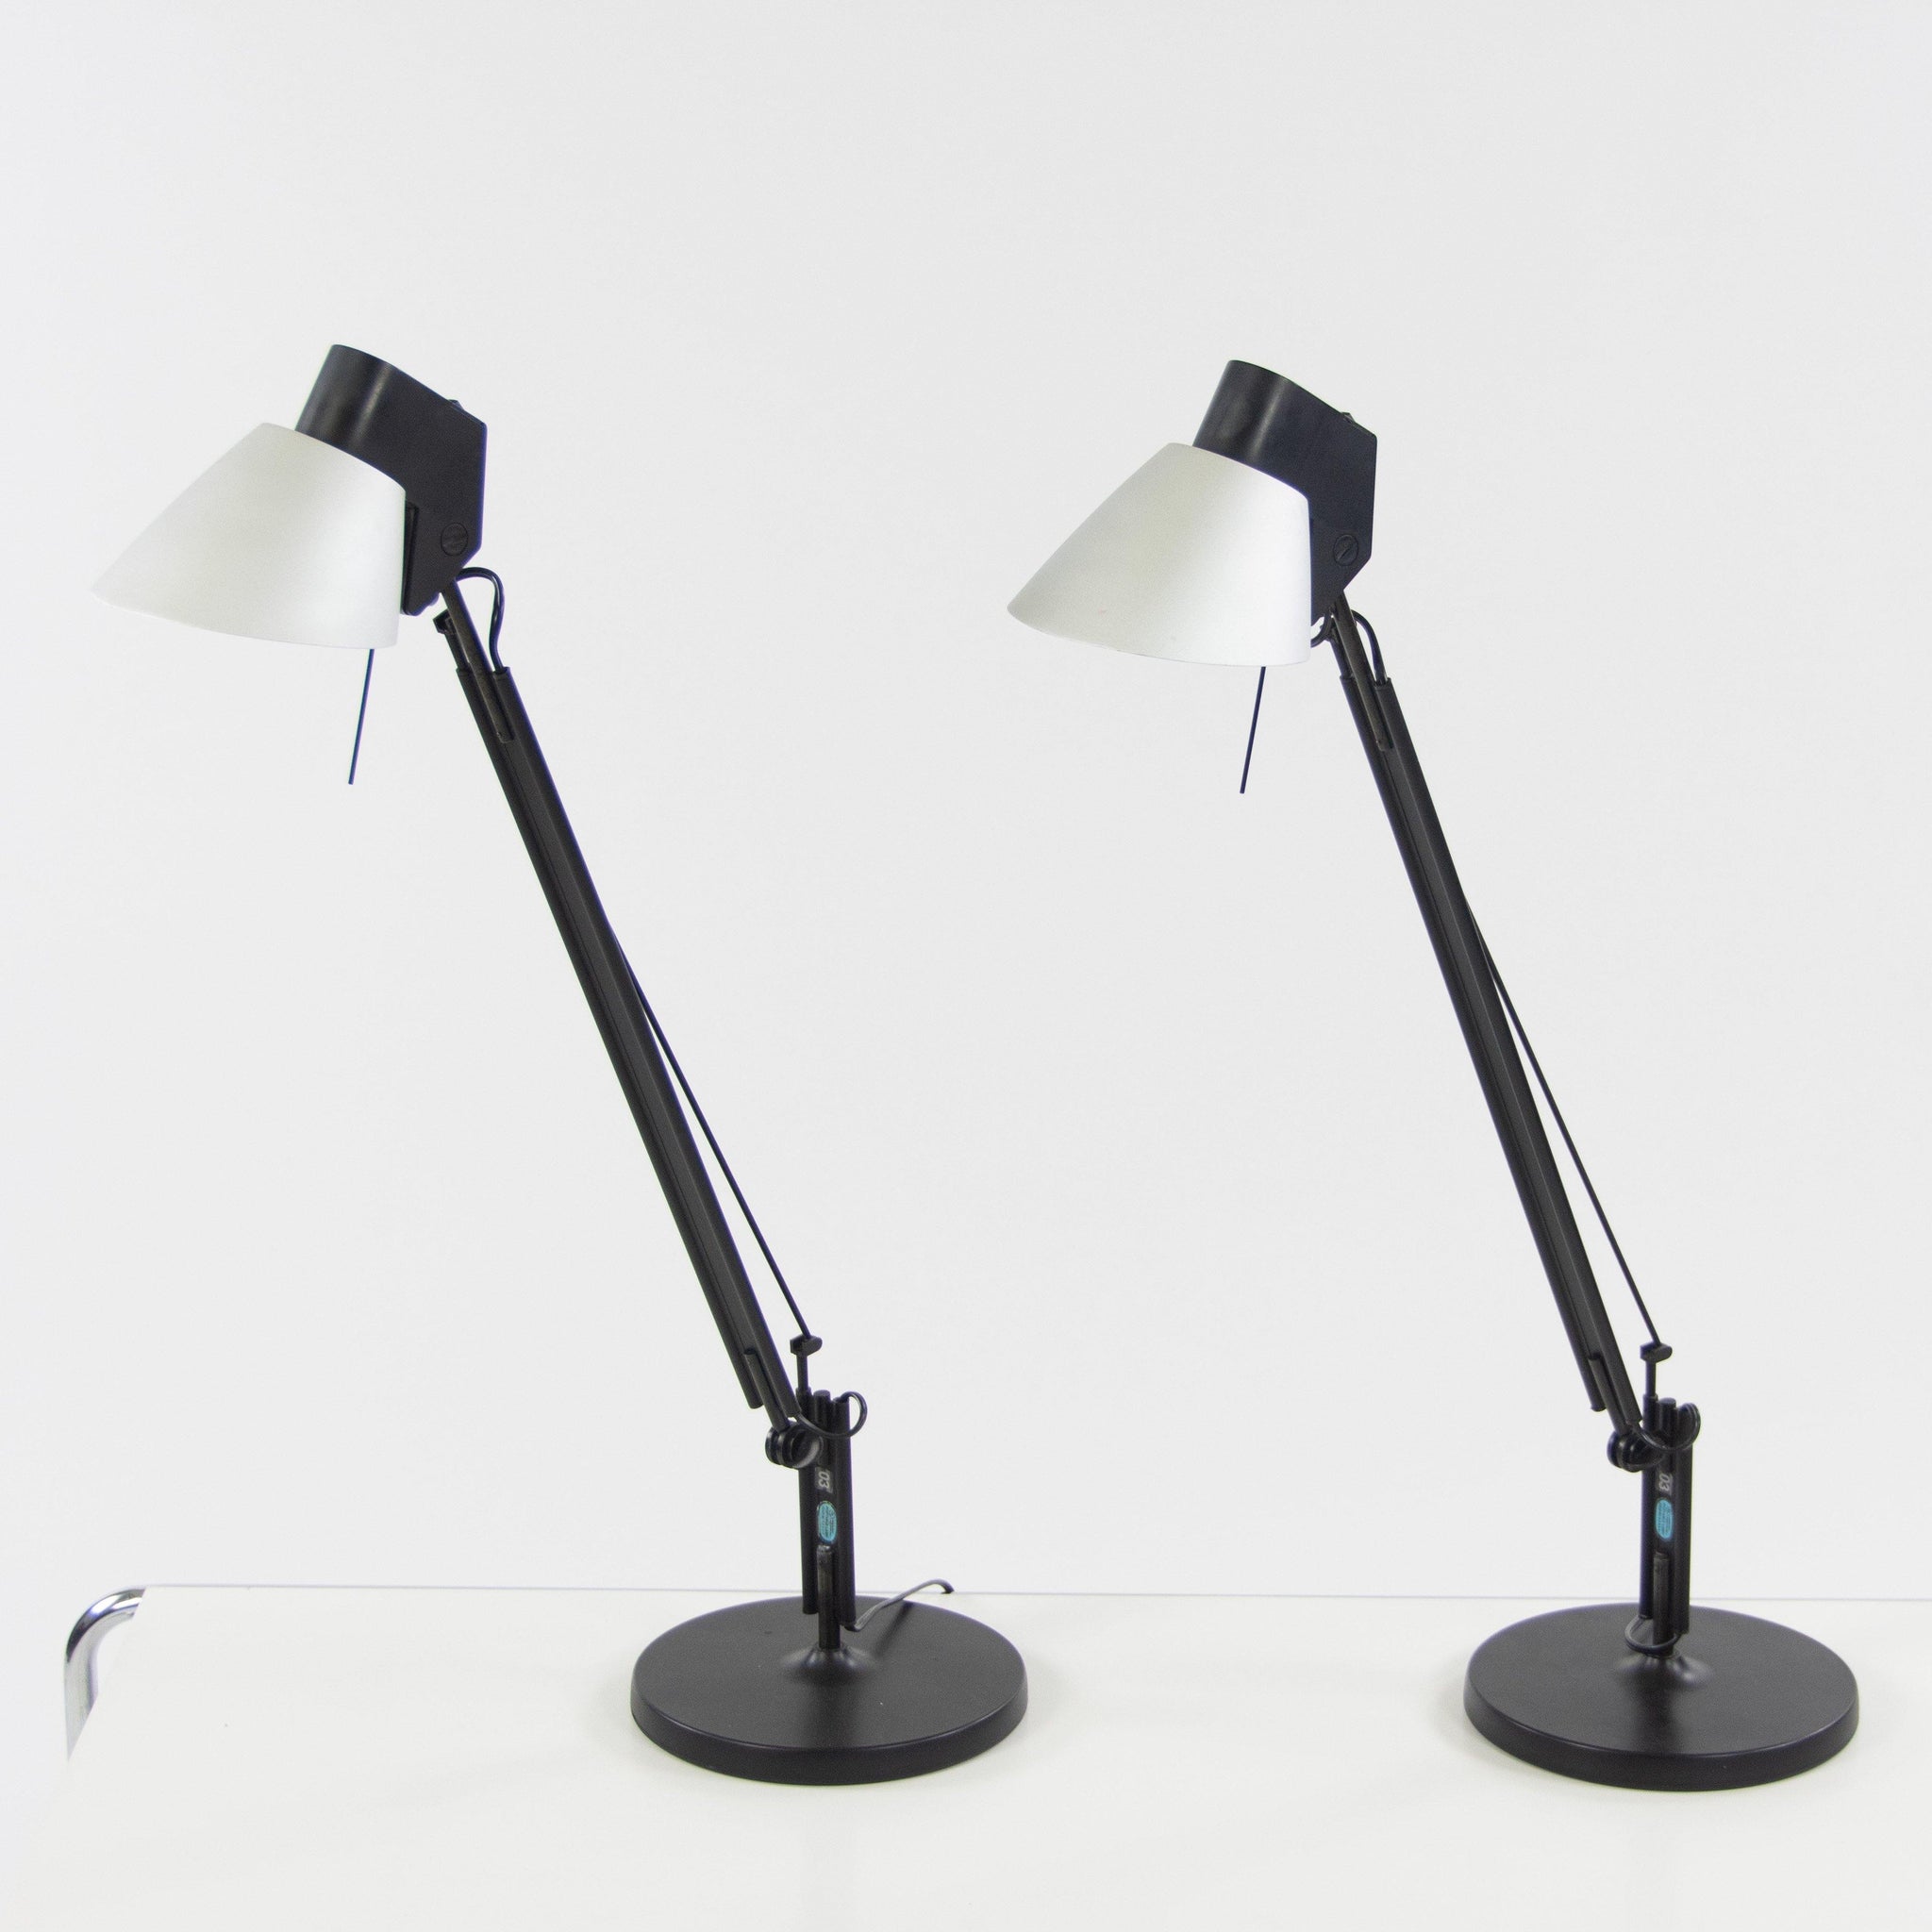 Mario Barbaglia and Marco Colombo Vintage Italiana Luce Mod Studio Table Lamp 2x - Rarify Inc.